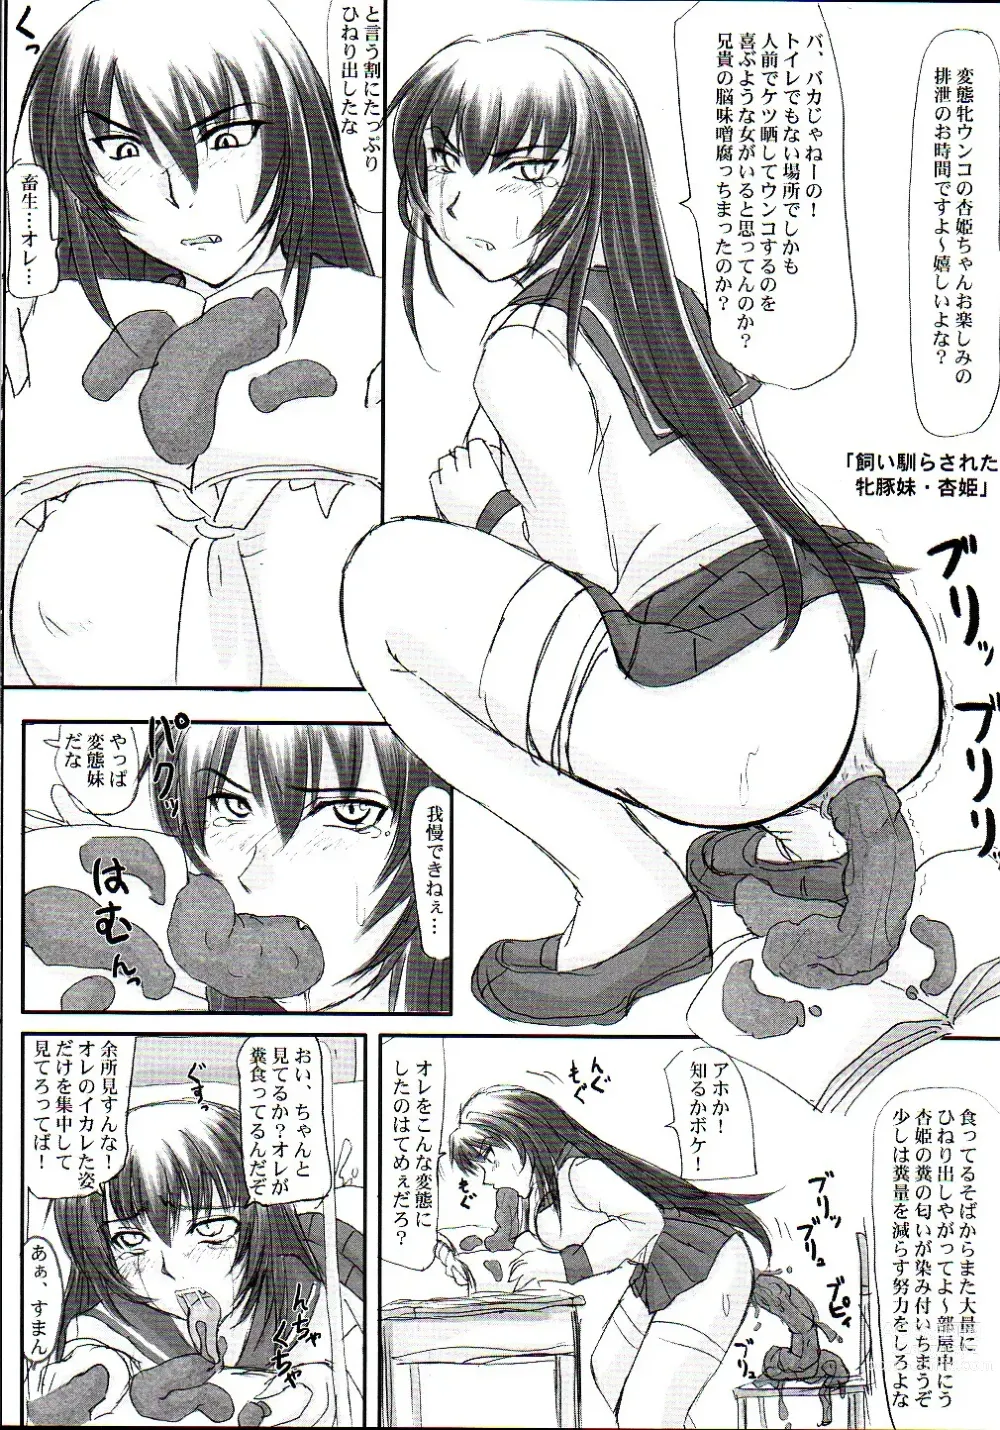 Page 41 of doujinshi Tatakae! Kyouhime-sama!!